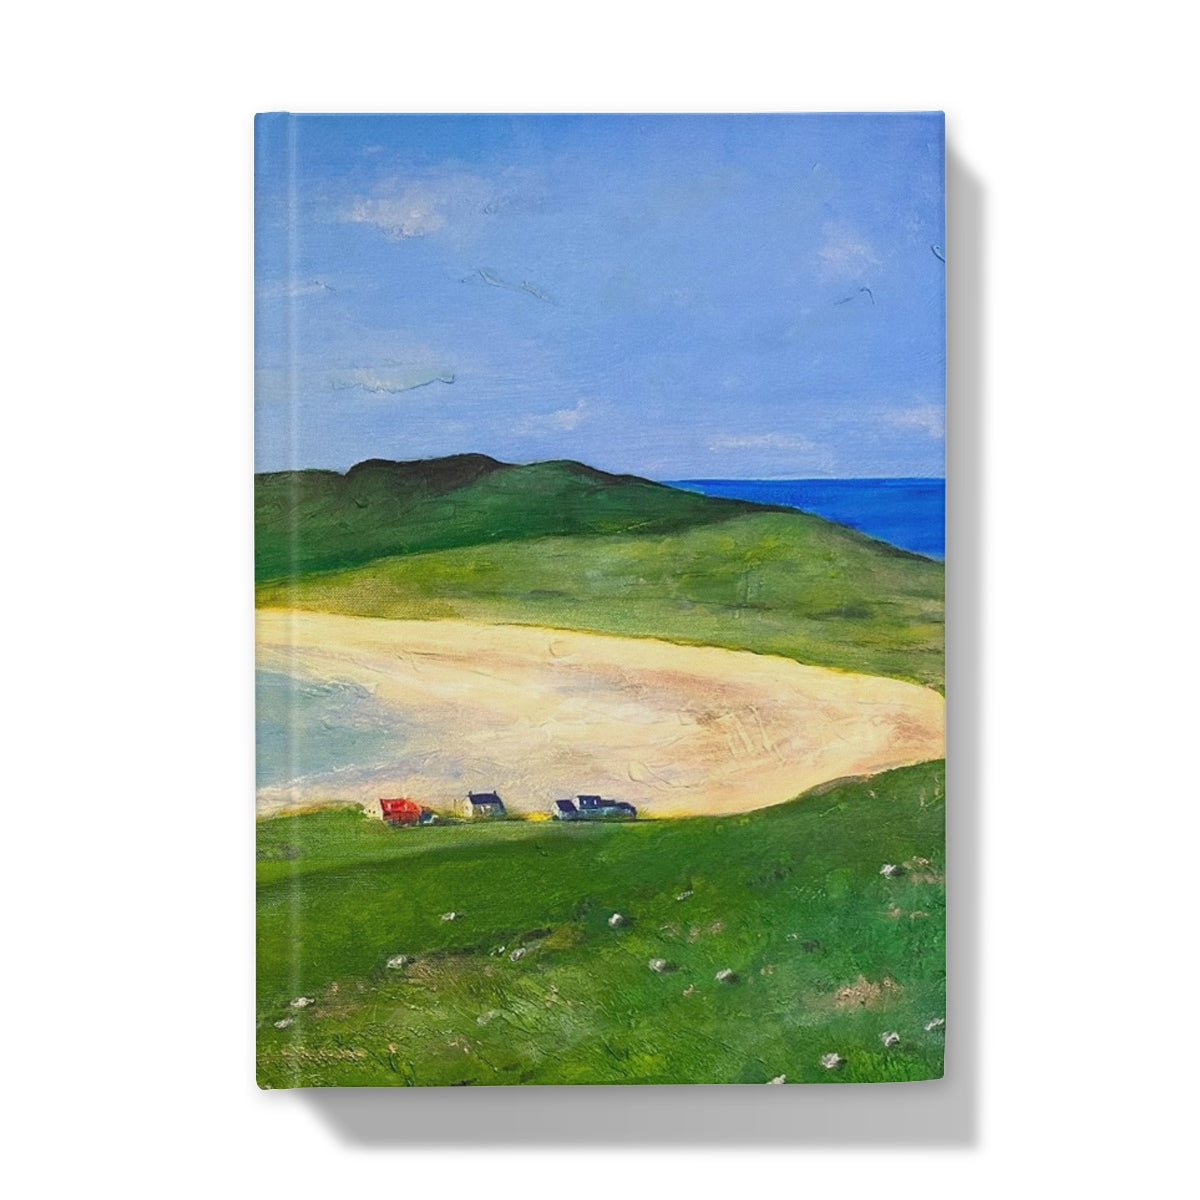 Balephuil Beach Tiree Art Gifts Hardback Journal-Journals & Notebooks-Hebridean Islands Art Gallery-A5-Lined-Paintings, Prints, Homeware, Art Gifts From Scotland By Scottish Artist Kevin Hunter